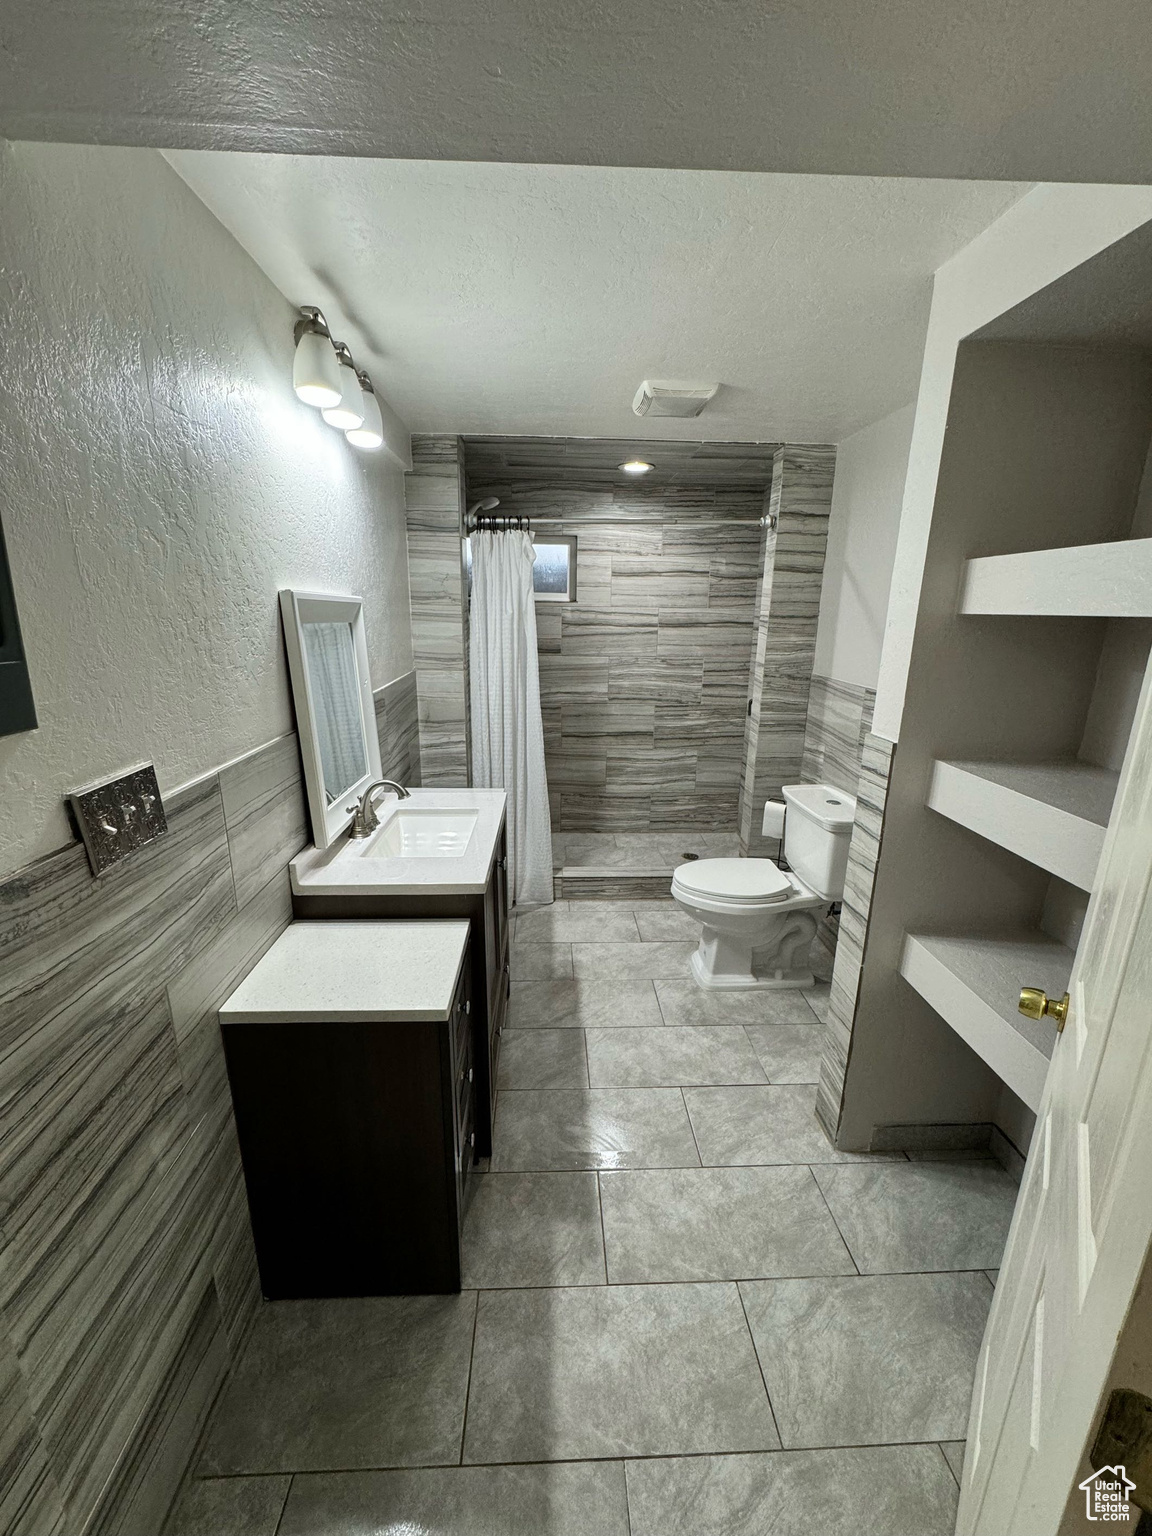 Bathroom with tile walls, tile flooring, vanity, and toilet